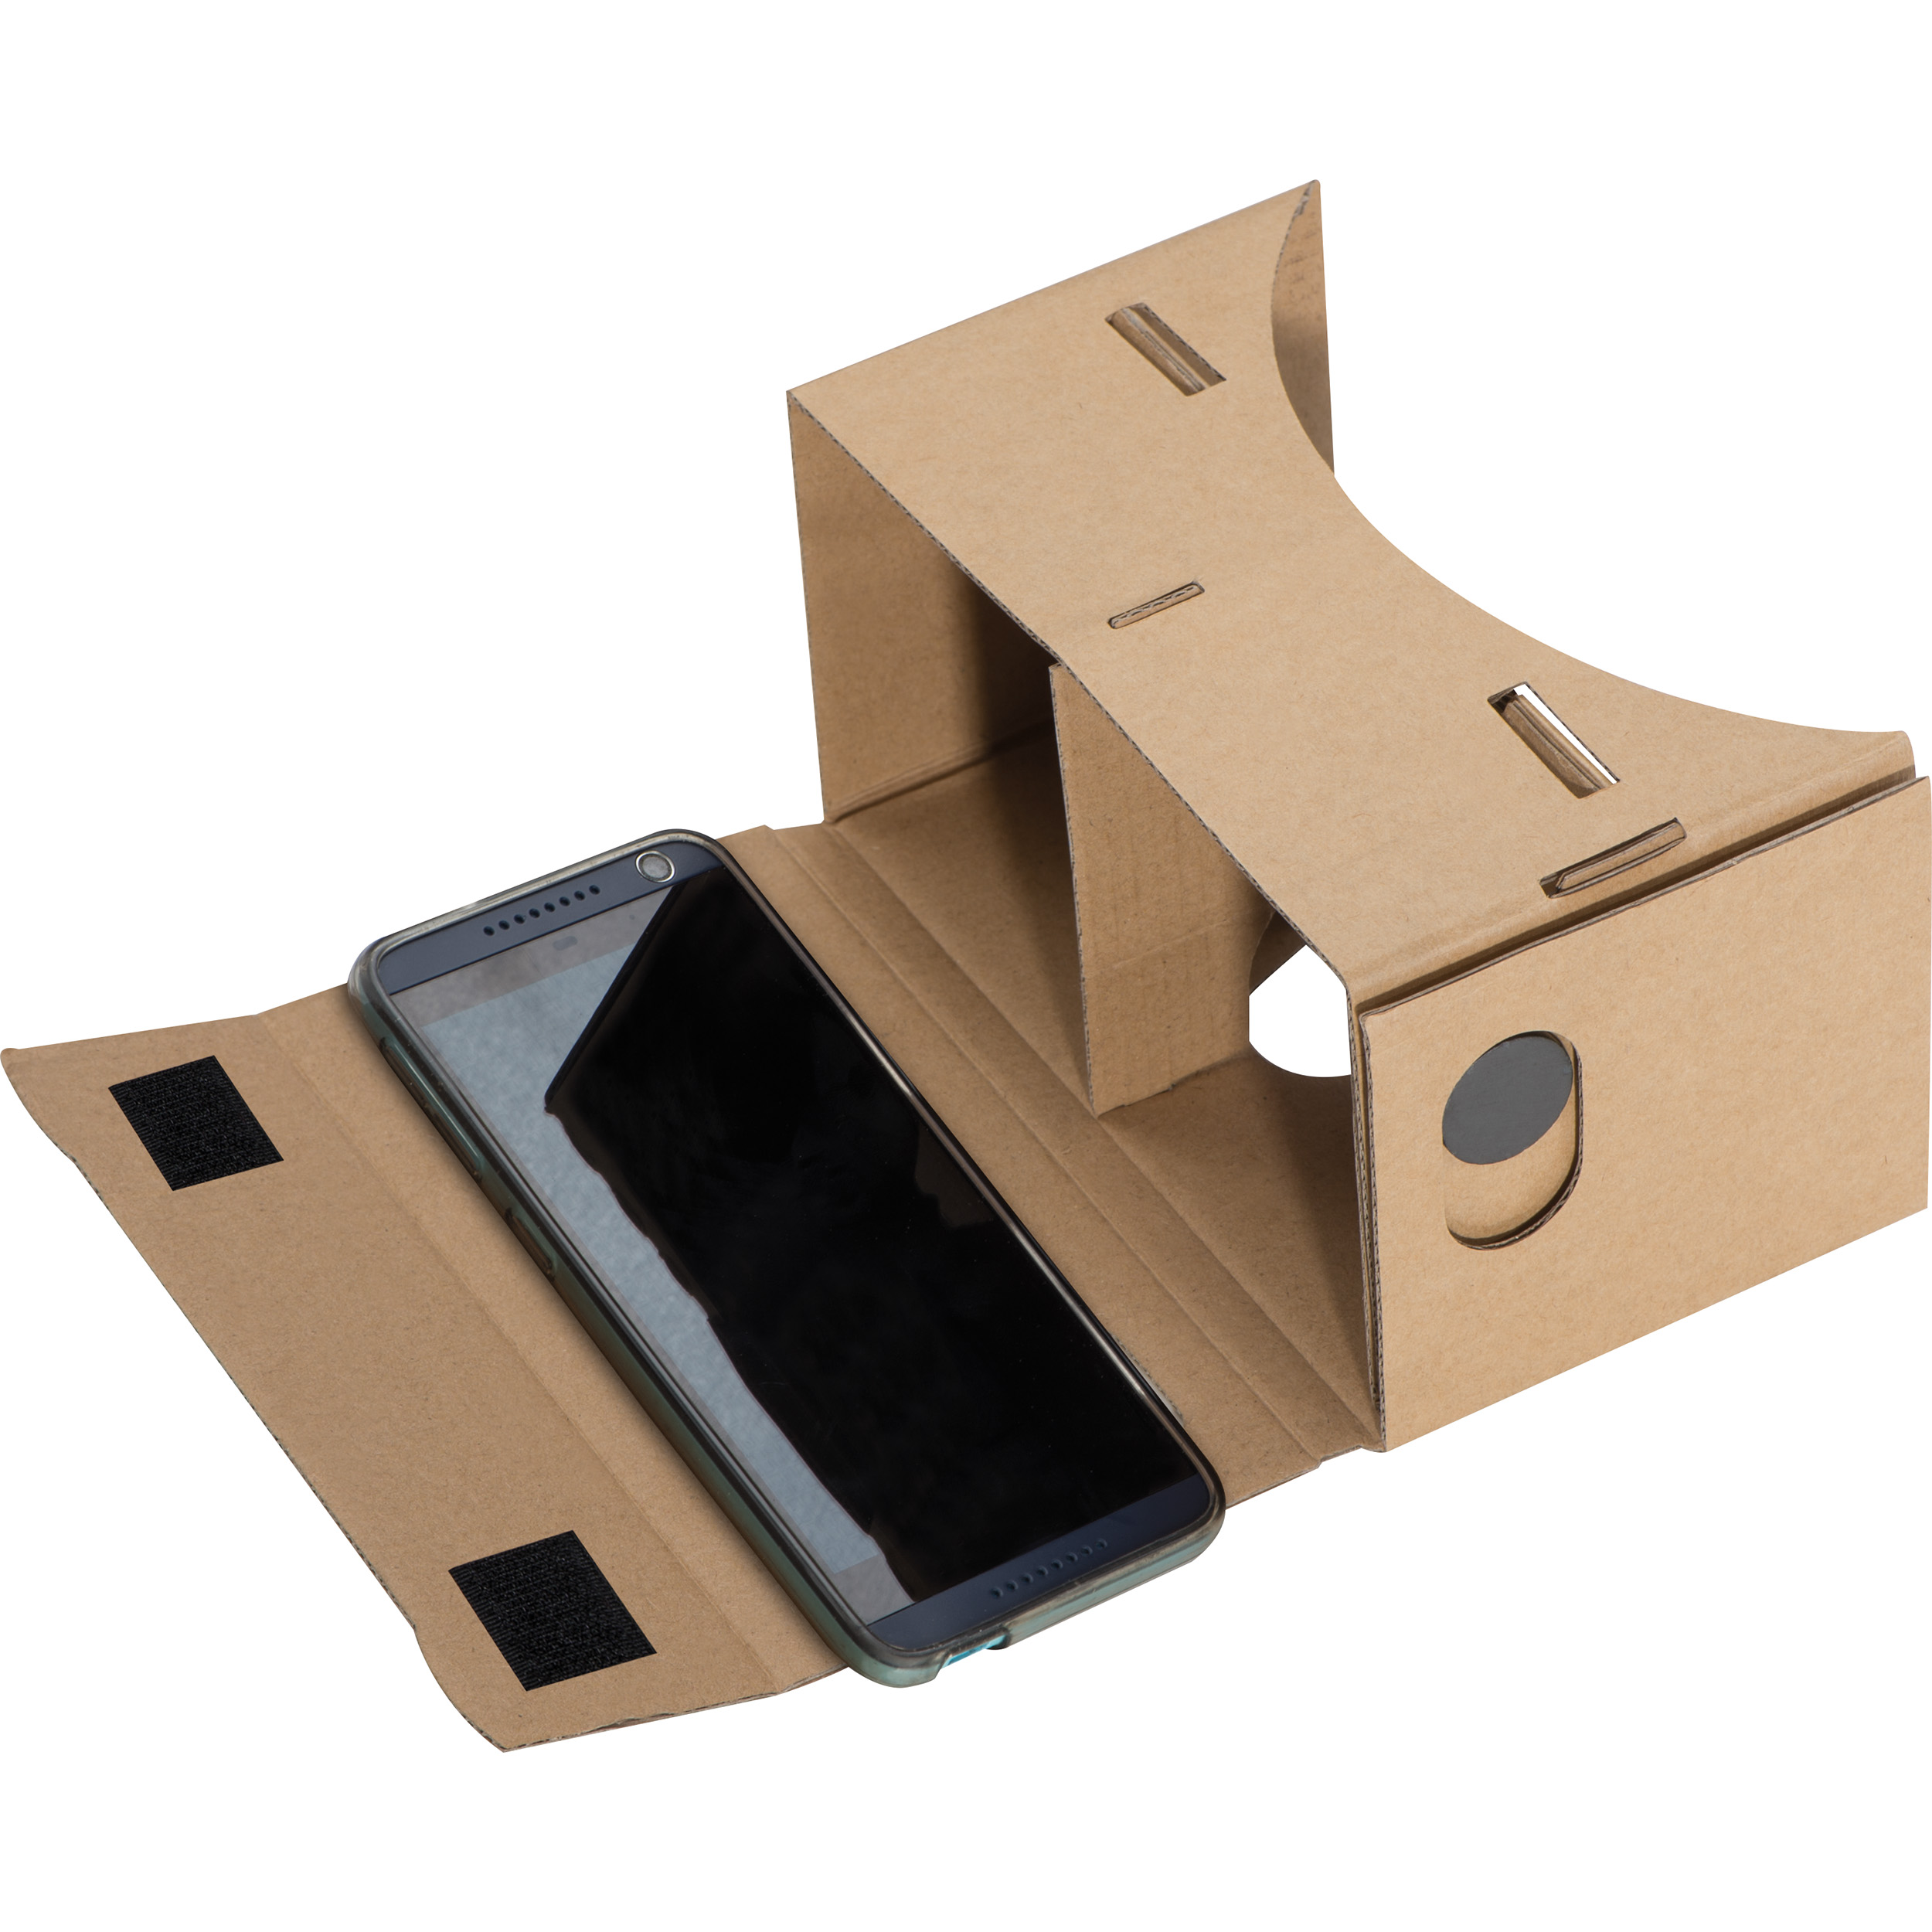 Virtual Reality glasses made of cardboard